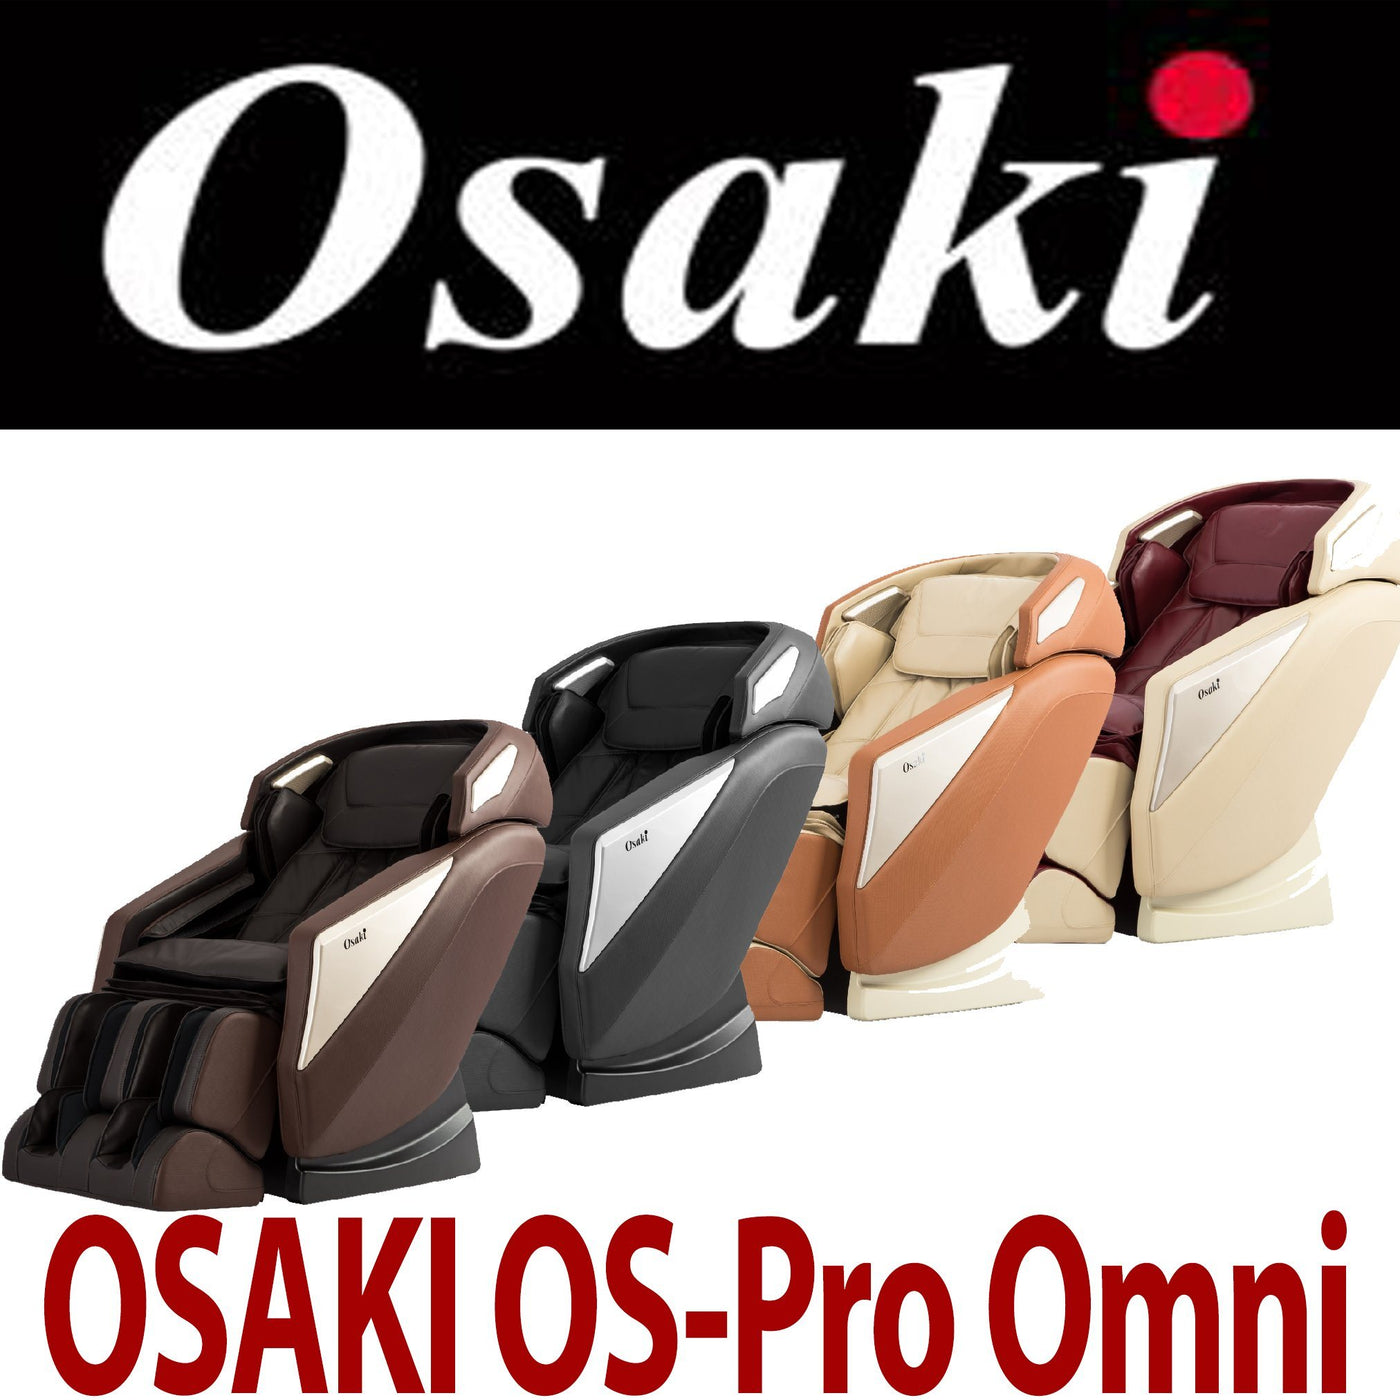 Osaki Os Pro Omni Massage Chair Lowest Price Guarantee No Tax